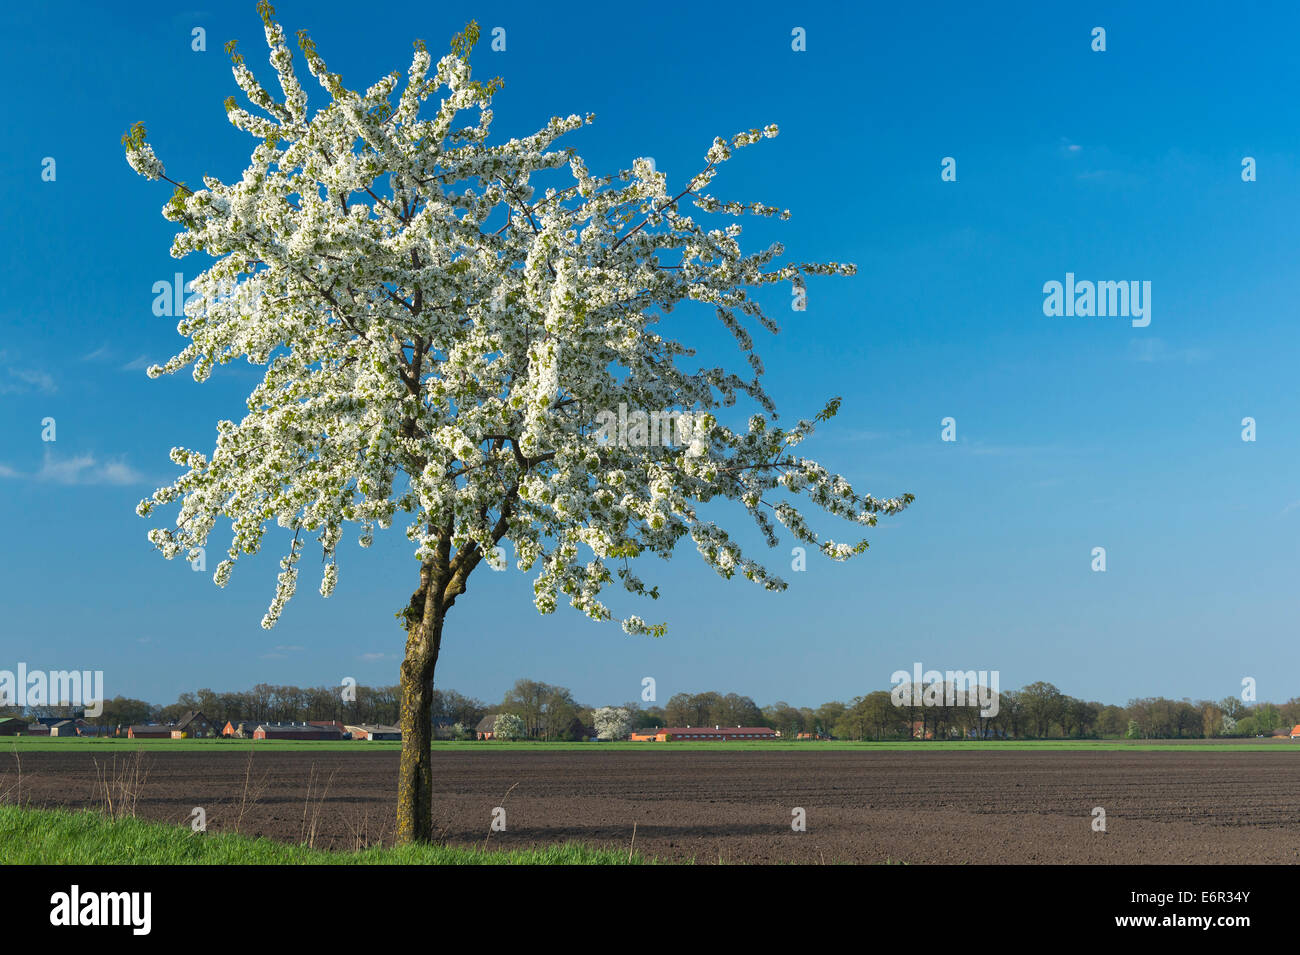 flowering cherry trees, osterfeine-bergfeine, damme, vechta, vechta district, oldenburger münsterland, lower saxony, germany Stock Photo